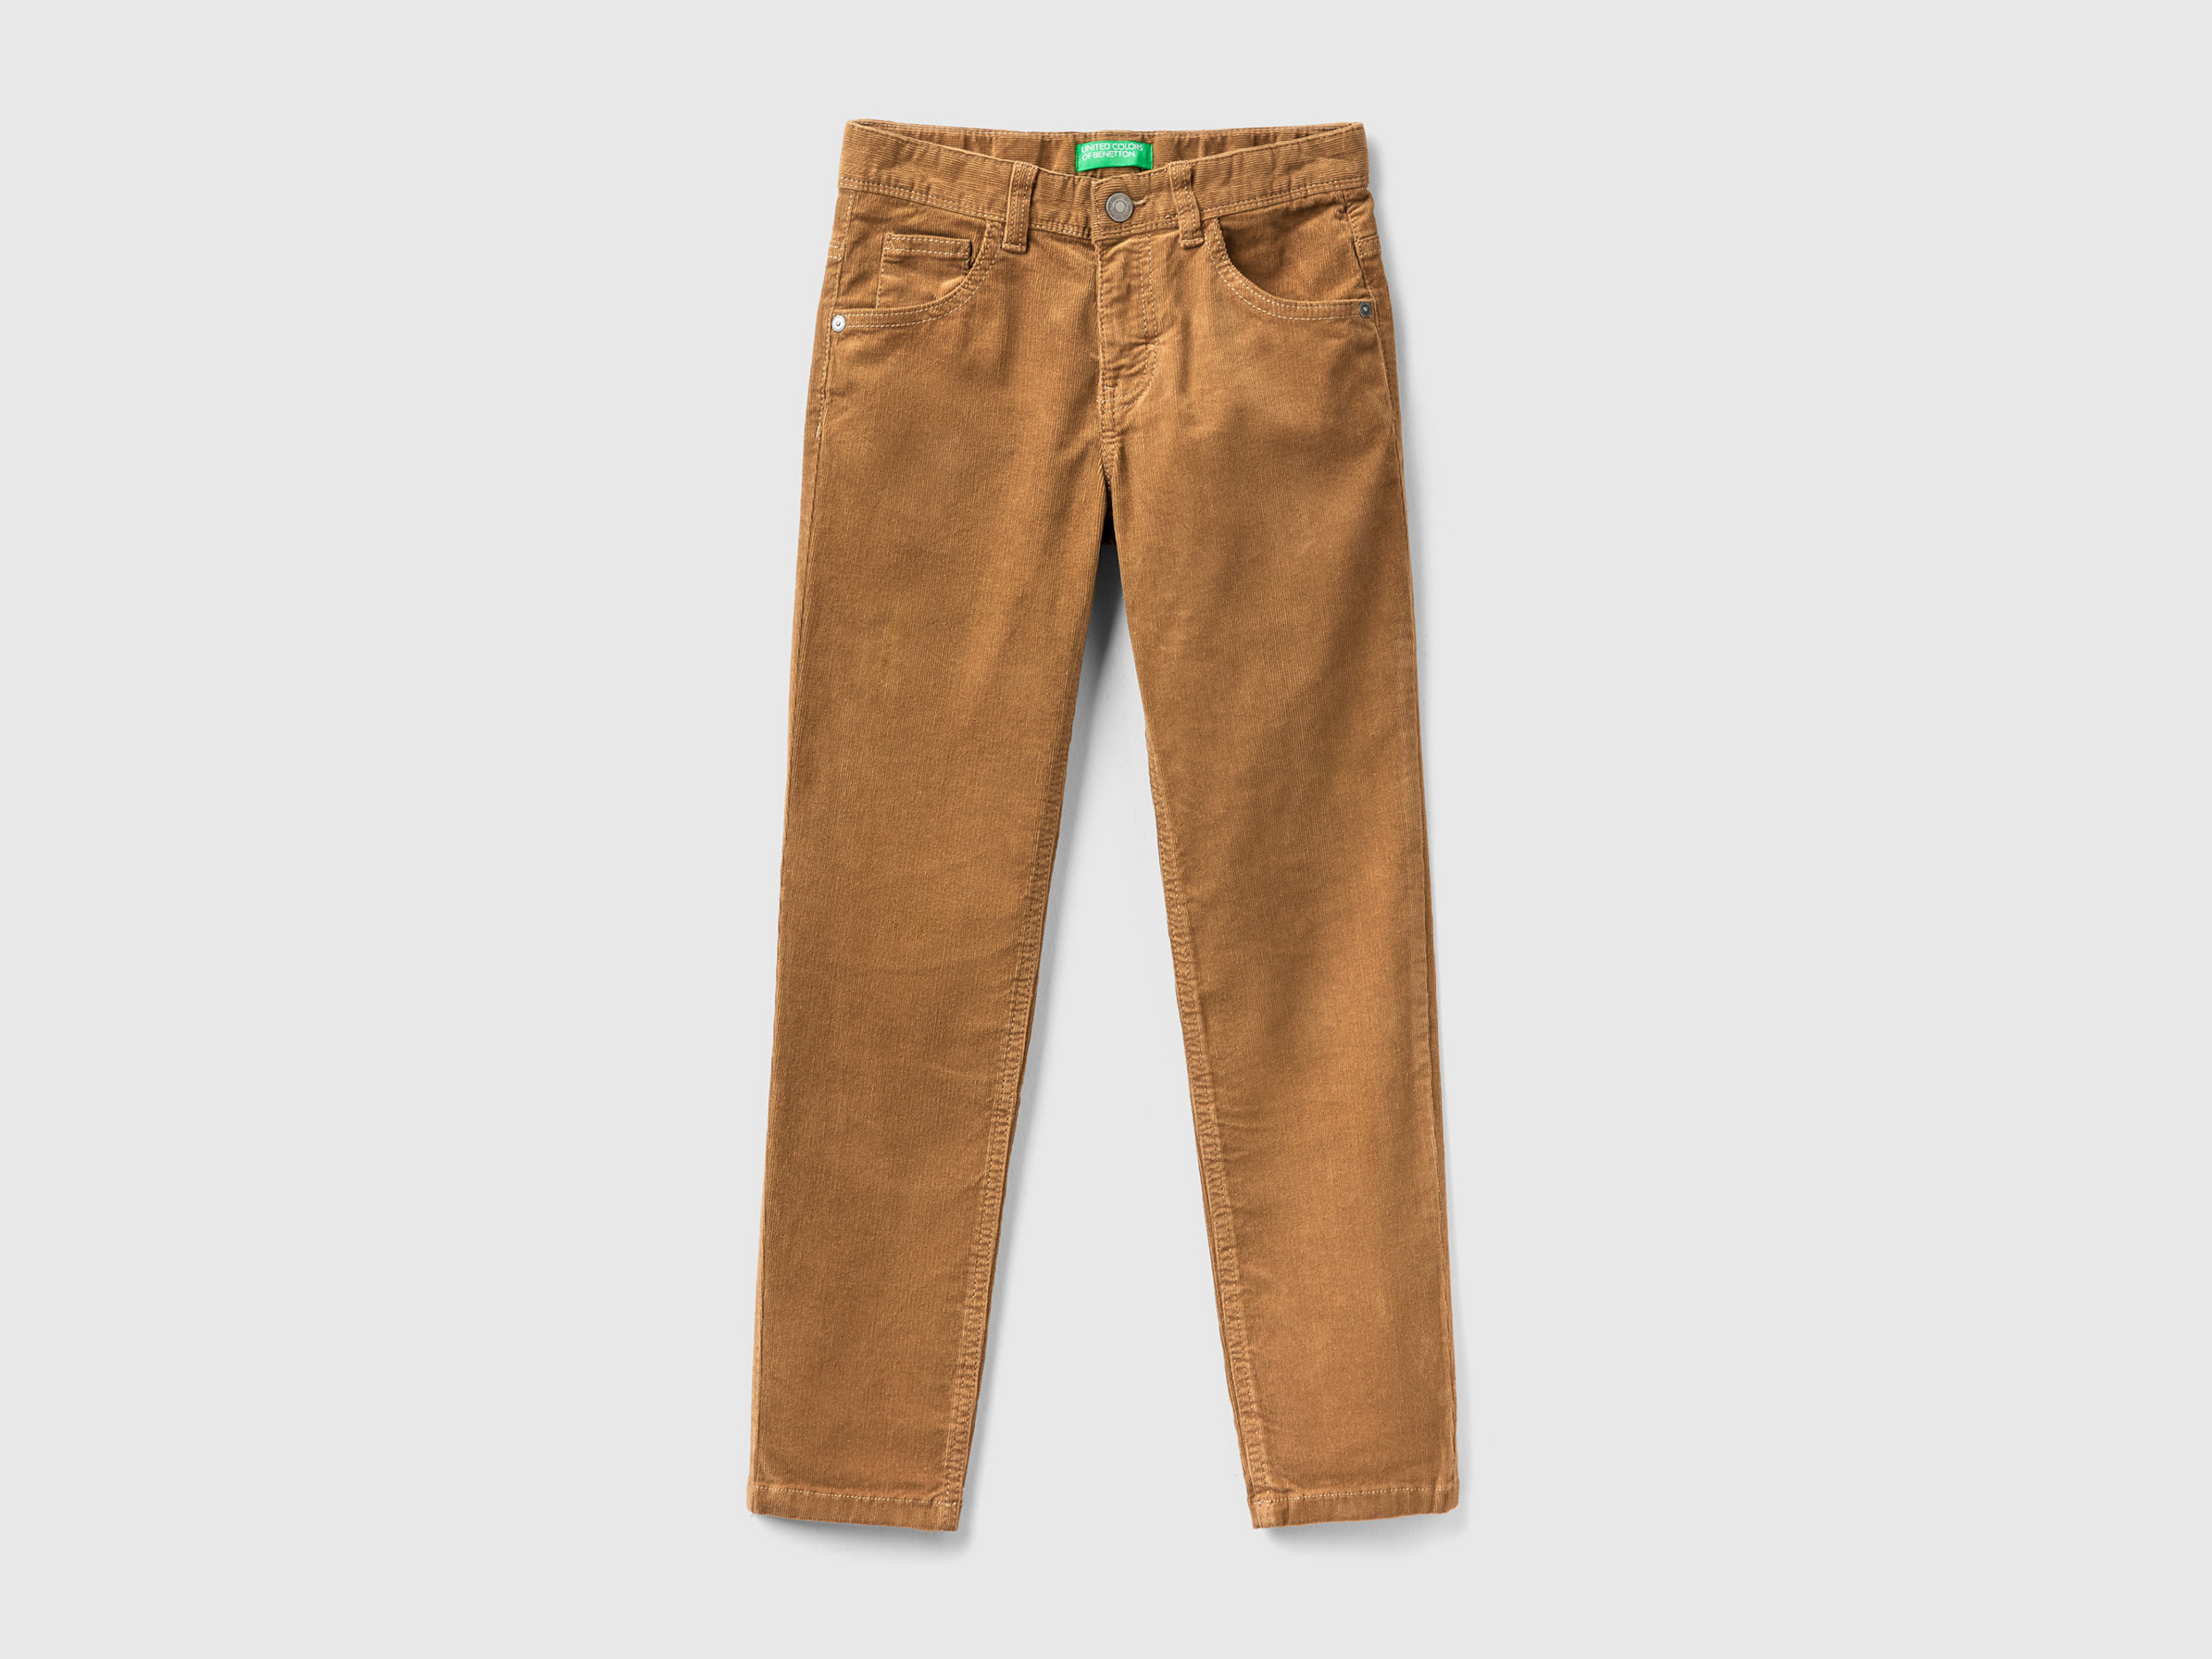 Benetton, Slim Fit Stretch Corduroy Trousers, size 3XL, Beige, Kids